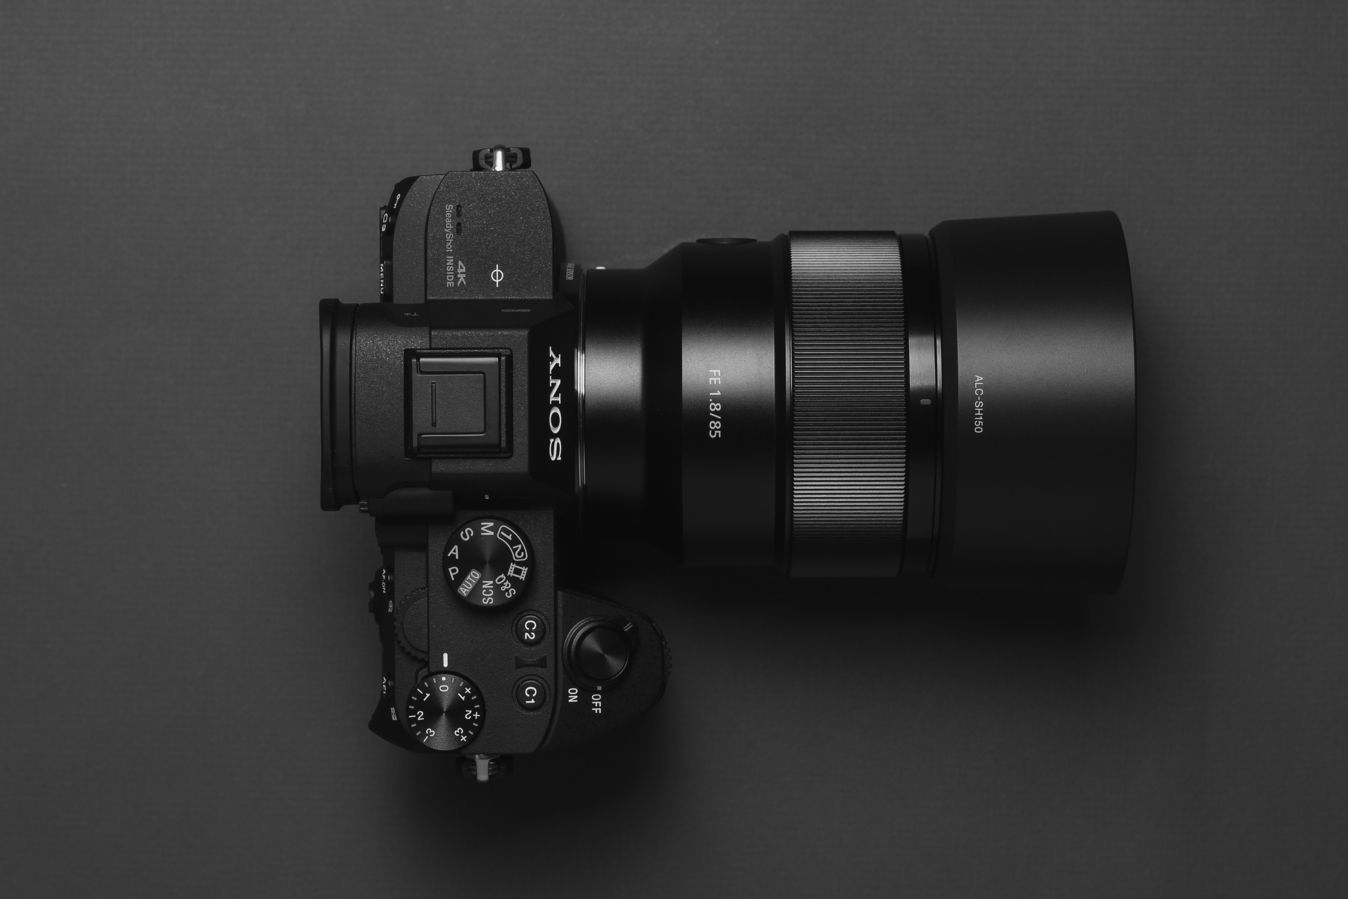 sony a58 camera review camera kit body lens